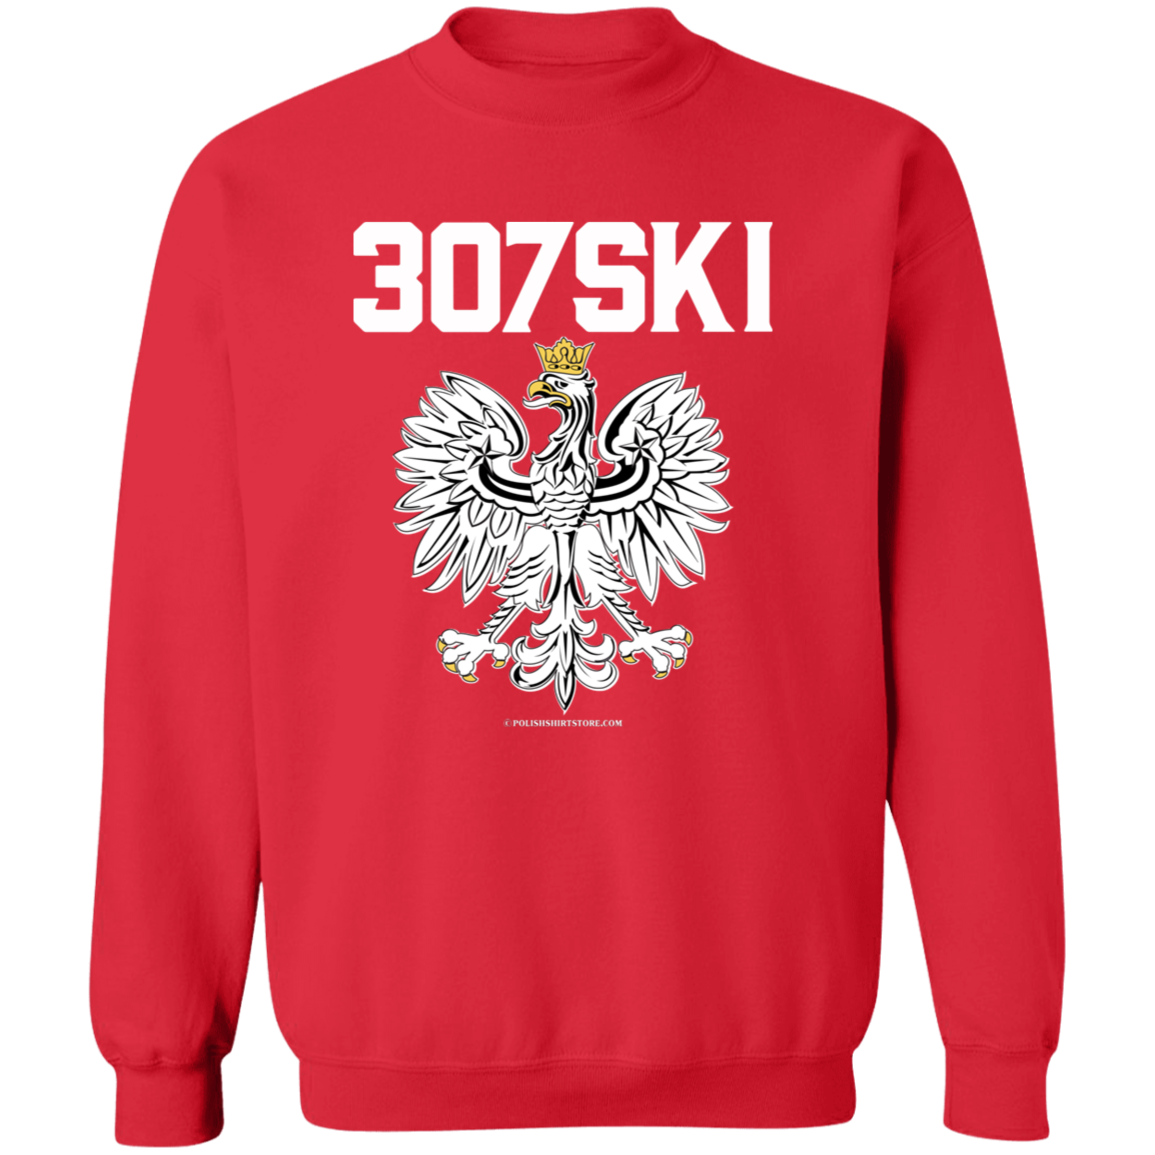 307SKI Apparel CustomCat G180 Crewneck Pullover Sweatshirt Red S